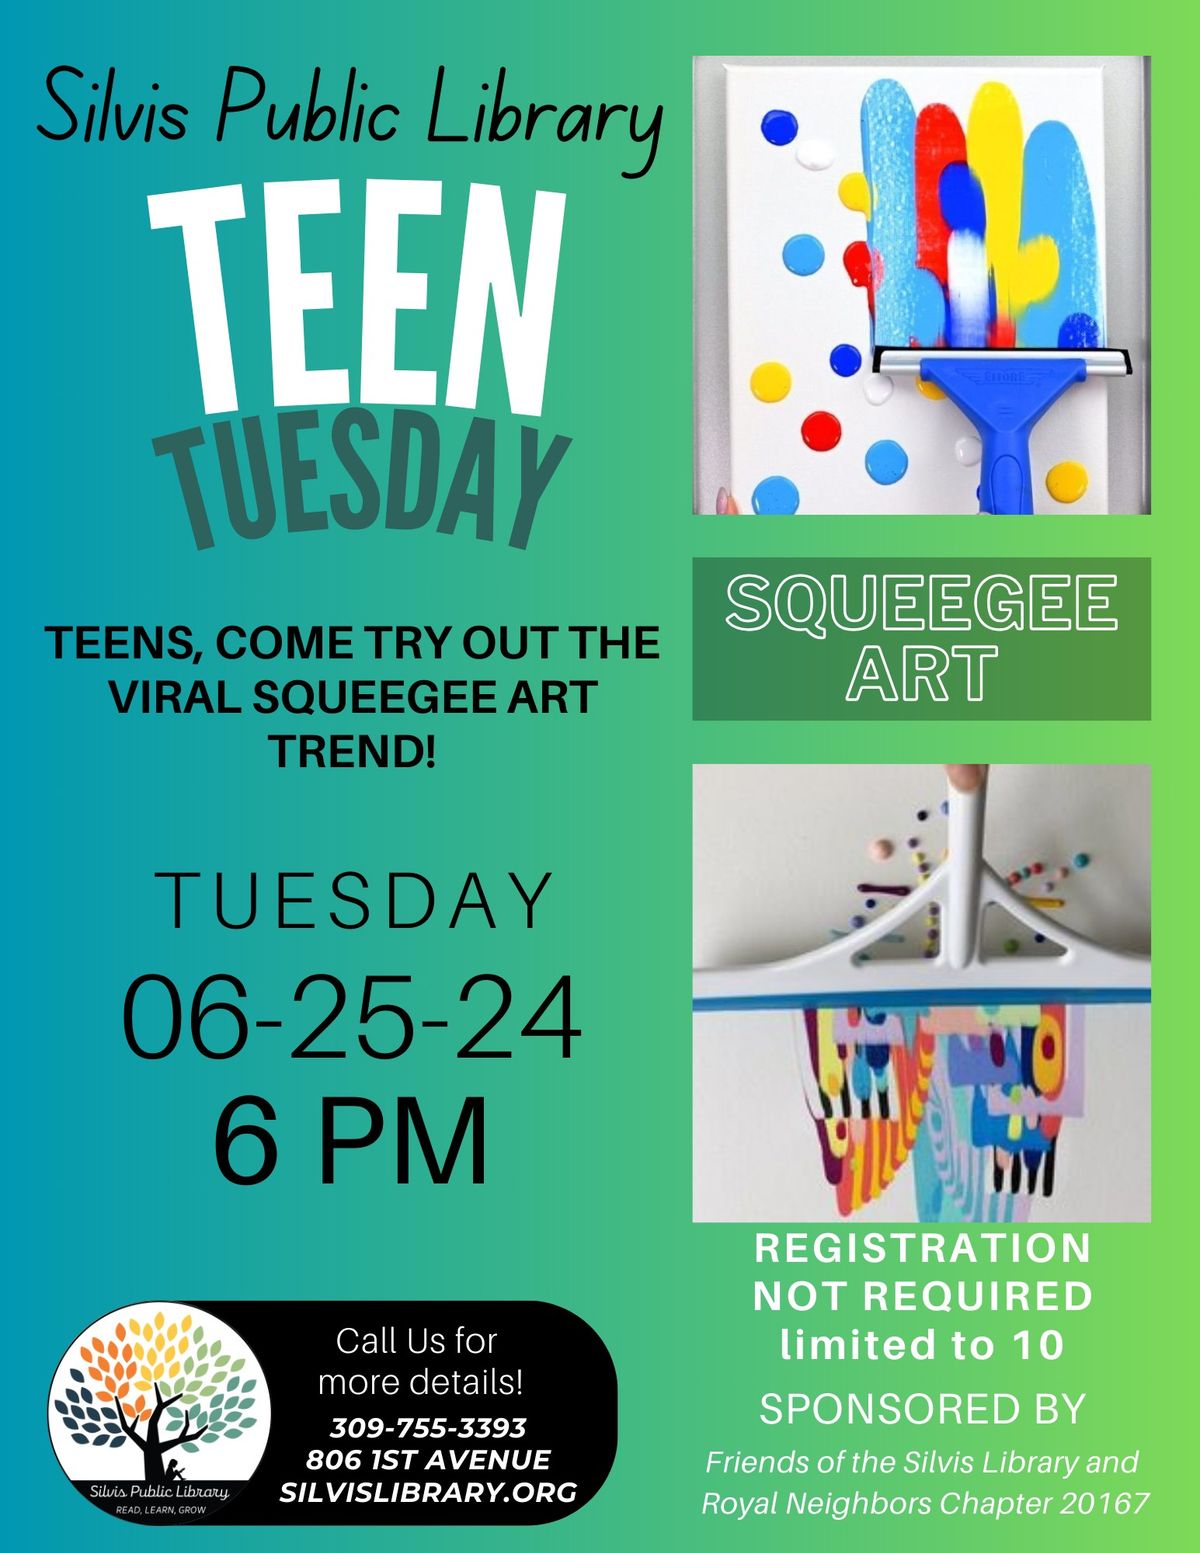 Teen Tuesday: Squeegee Art